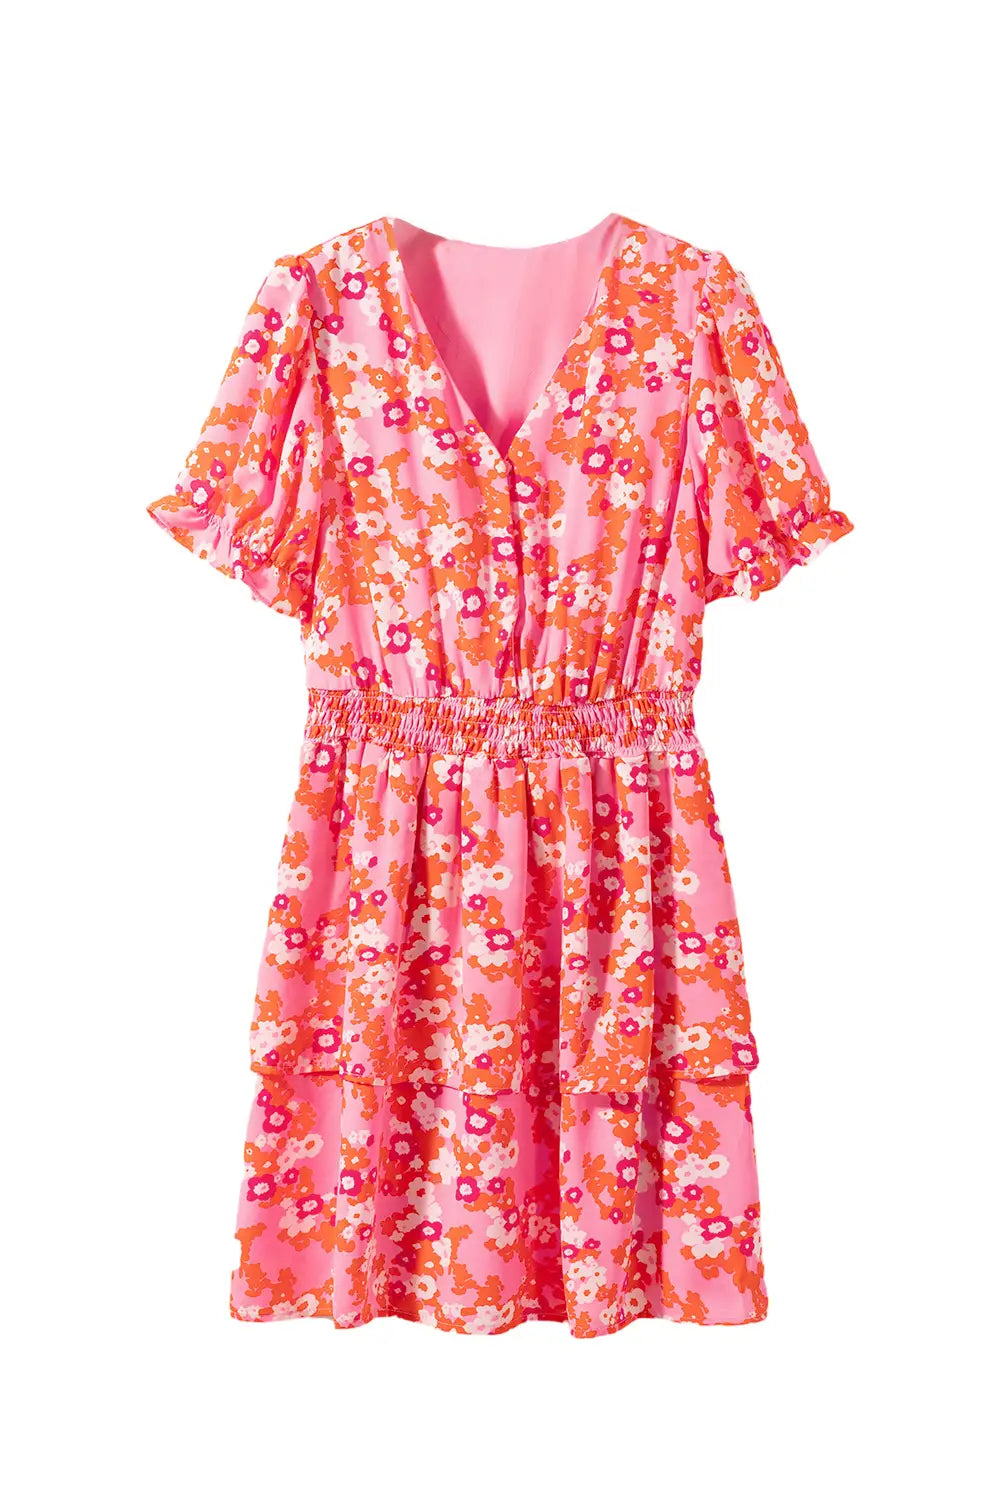 Pink floral v neck short ruffle tiered dress - dresses